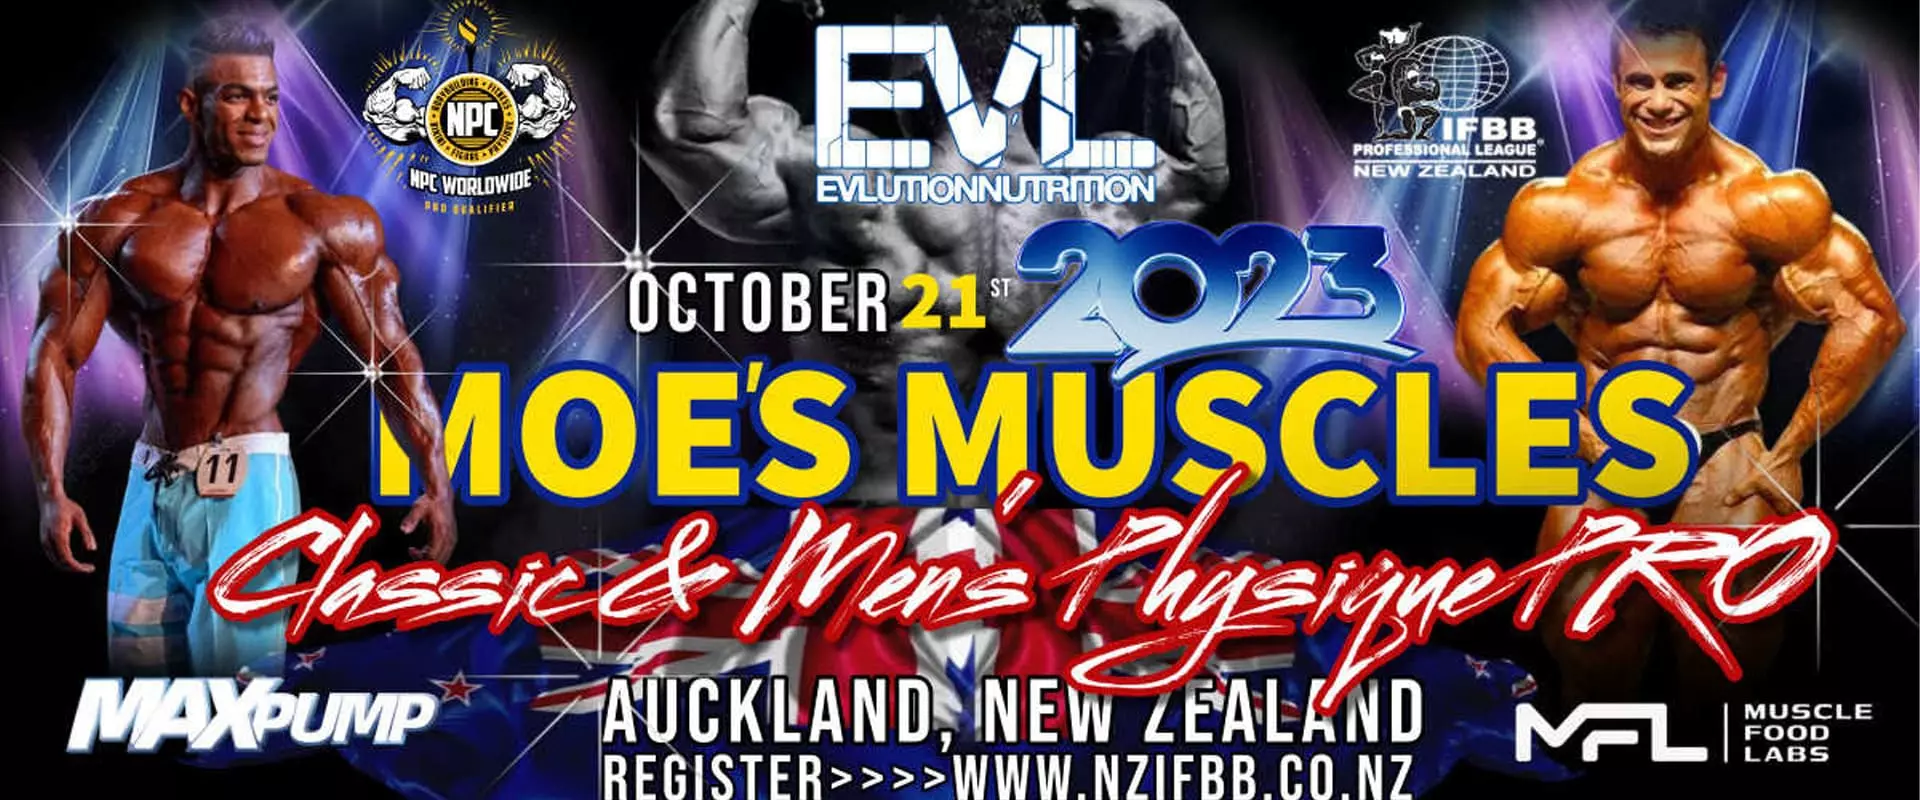 Moe’s Muscle New Zealand Pro 2023